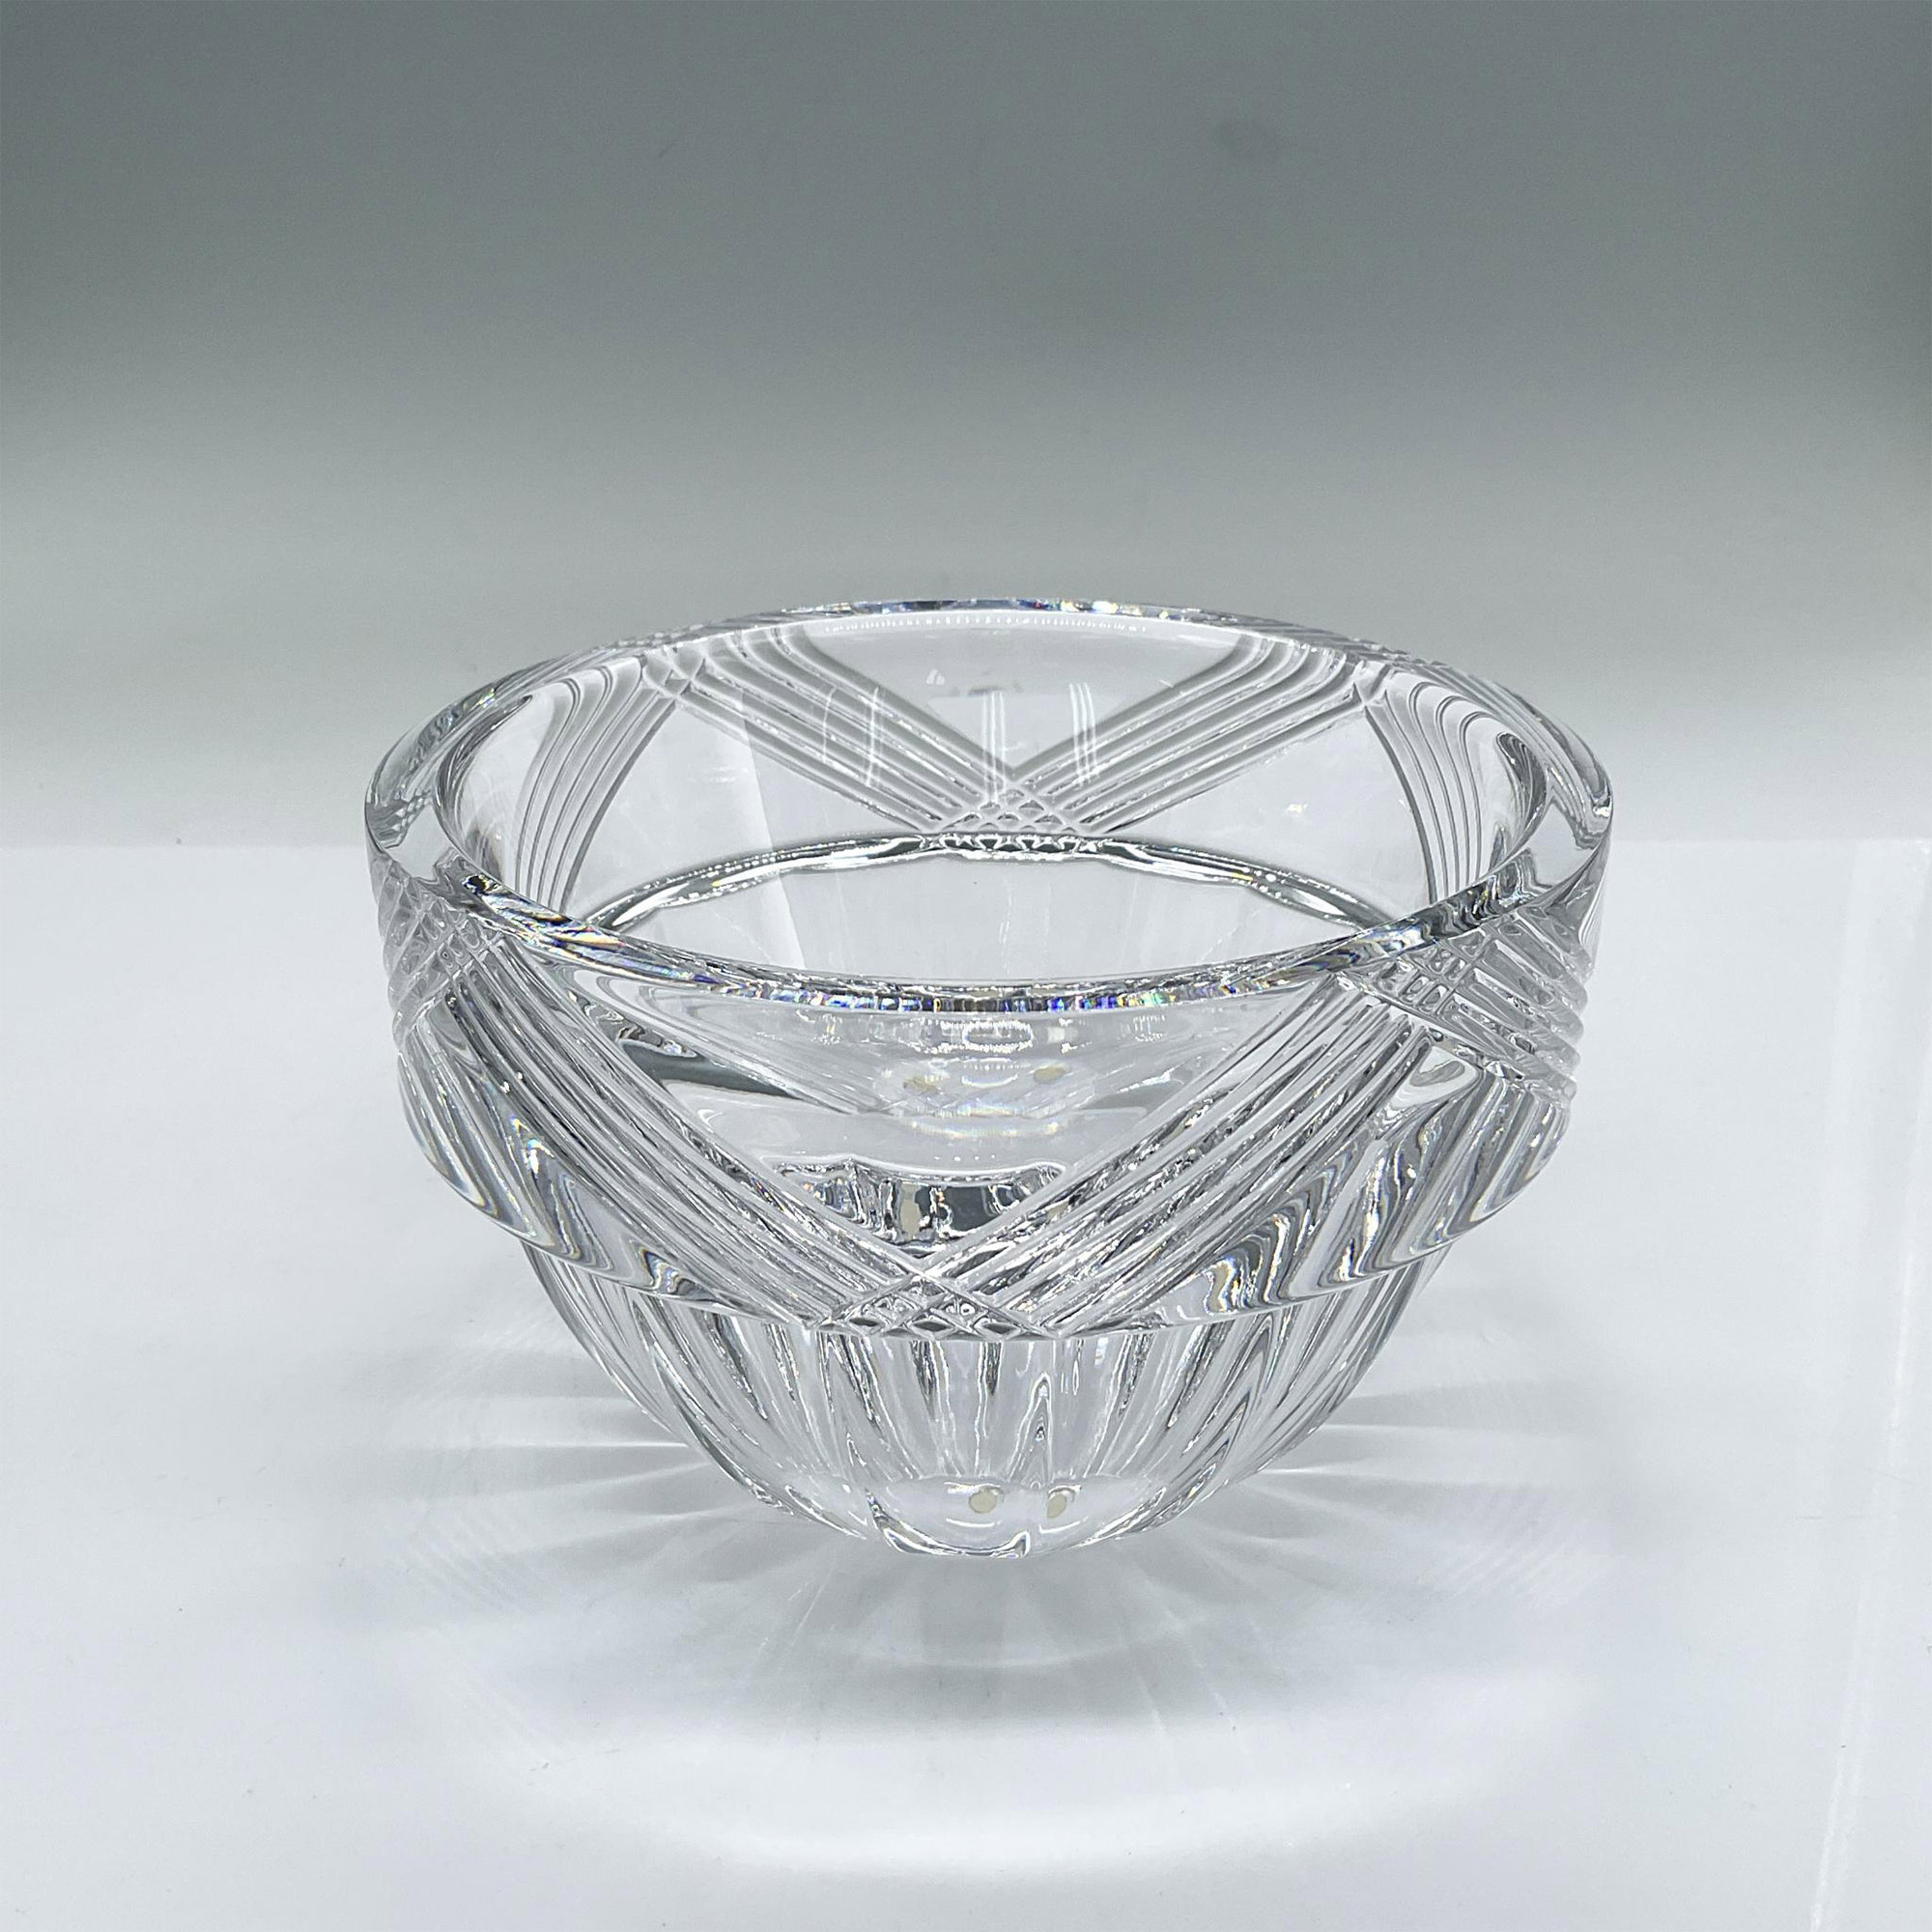 Orrefors Crystal Bowl by Erika Lagerbielke - Image 2 of 3